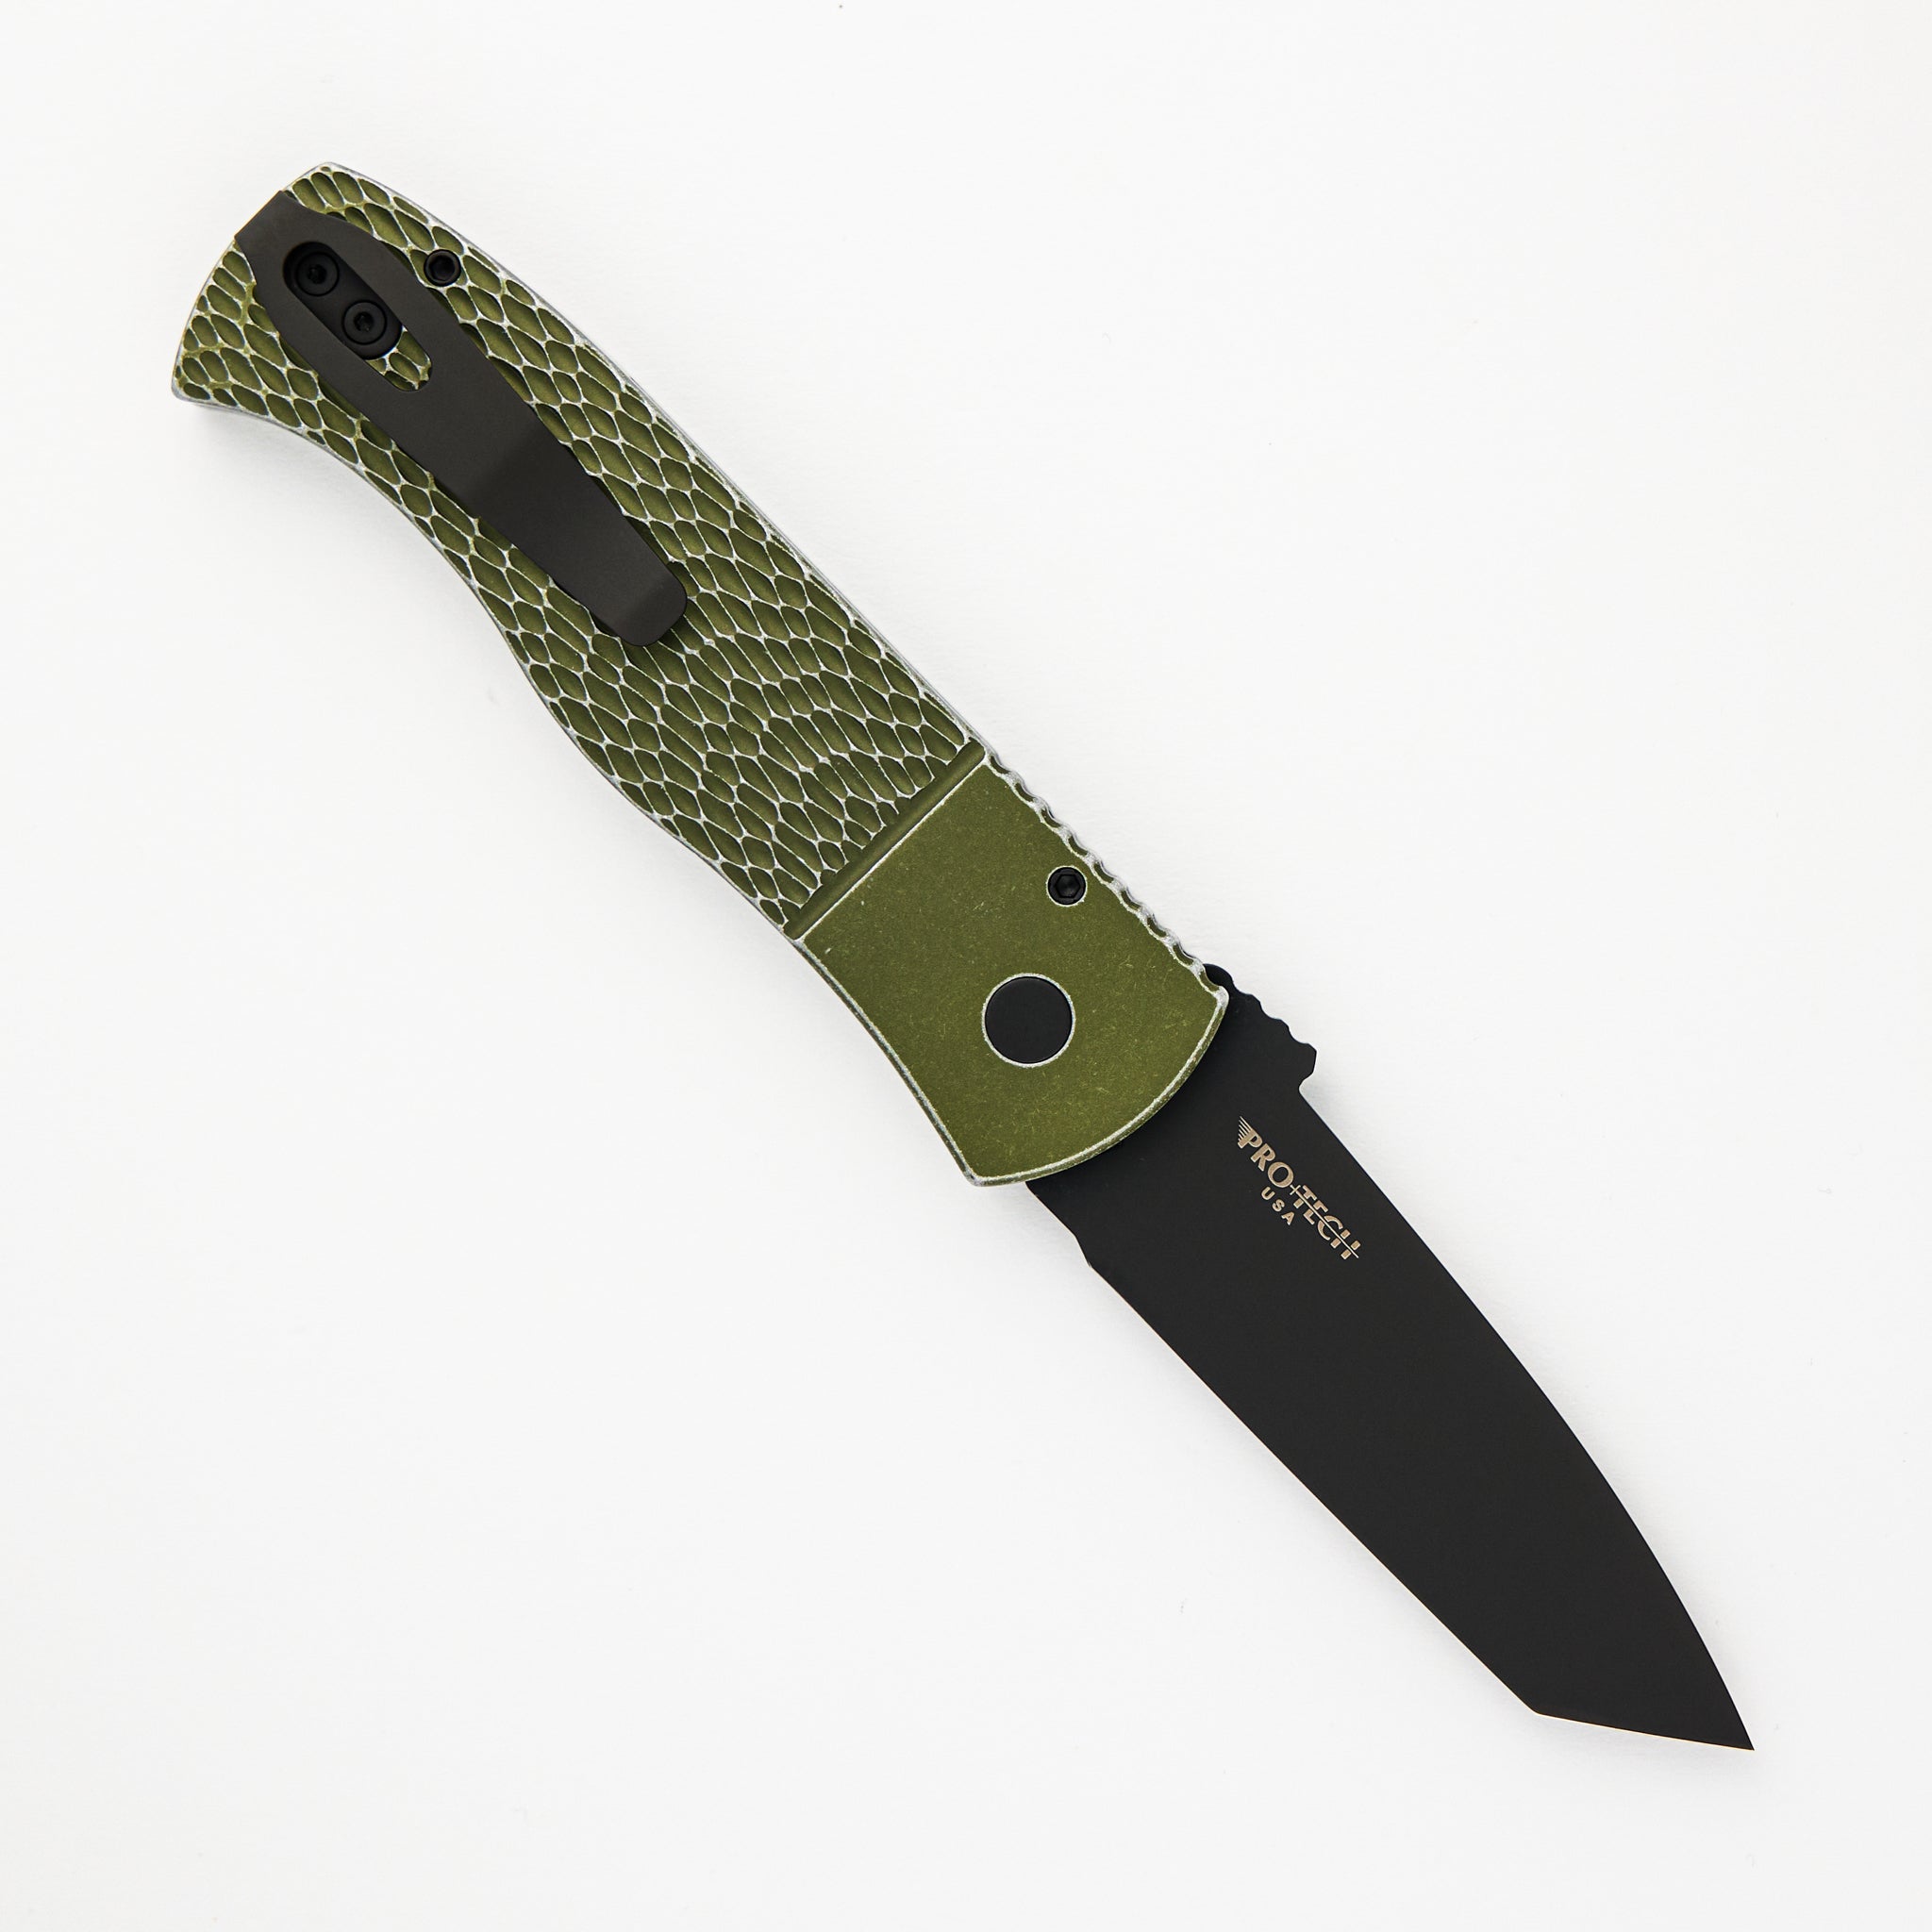 Pro-Tech Knives Emerson CQC7 Auto - Green "Battle Worn" Jigged Textured Handle - 2-tone DLC/Satin 154cm Tanto Blade E7T15-BW-GREEN